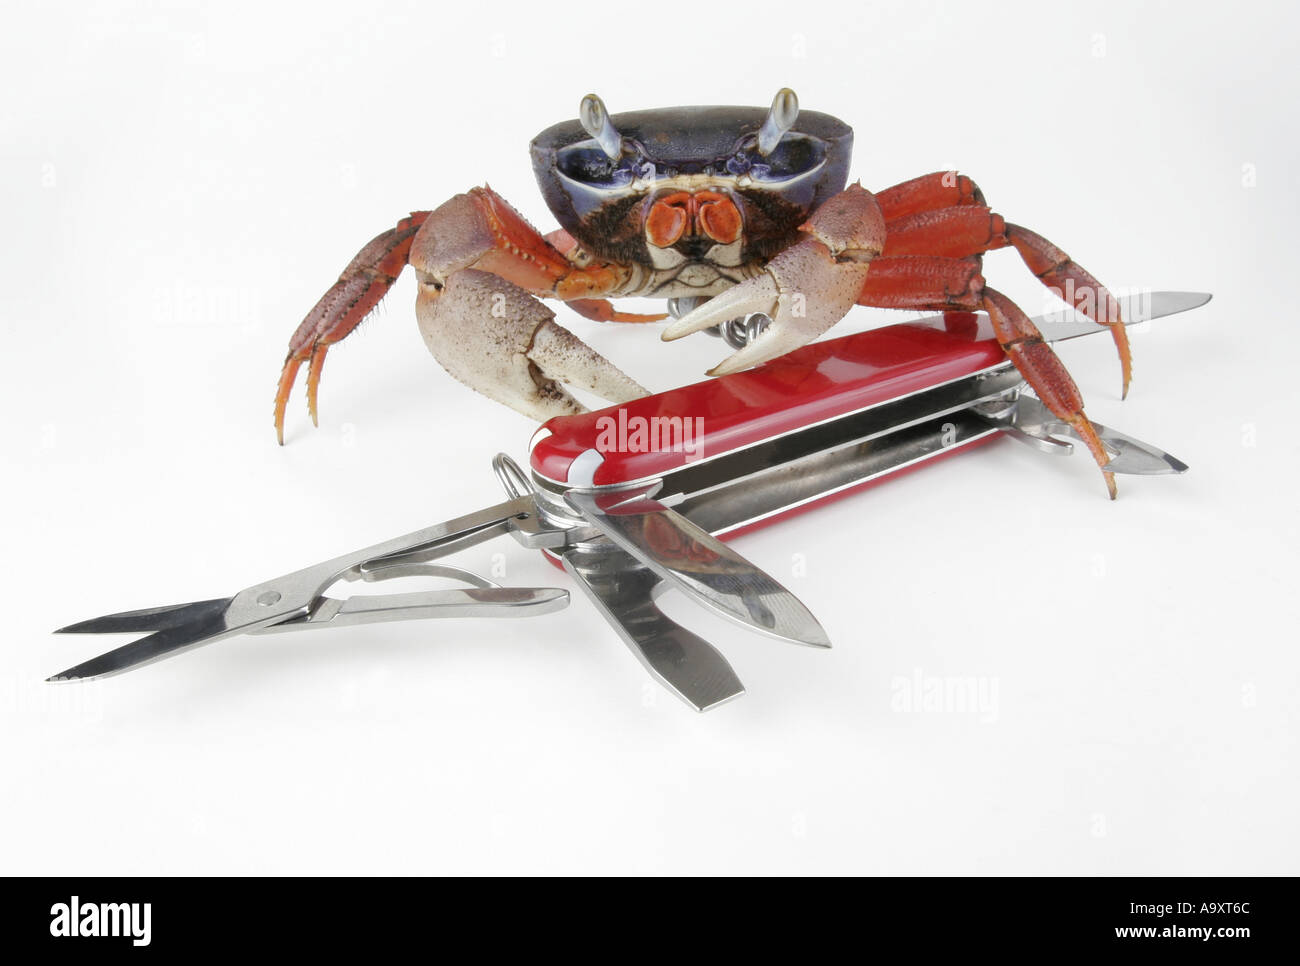 rainbow crab, West African rainbow crab (Cardisoma armatum), with multi tool. Stock Photo